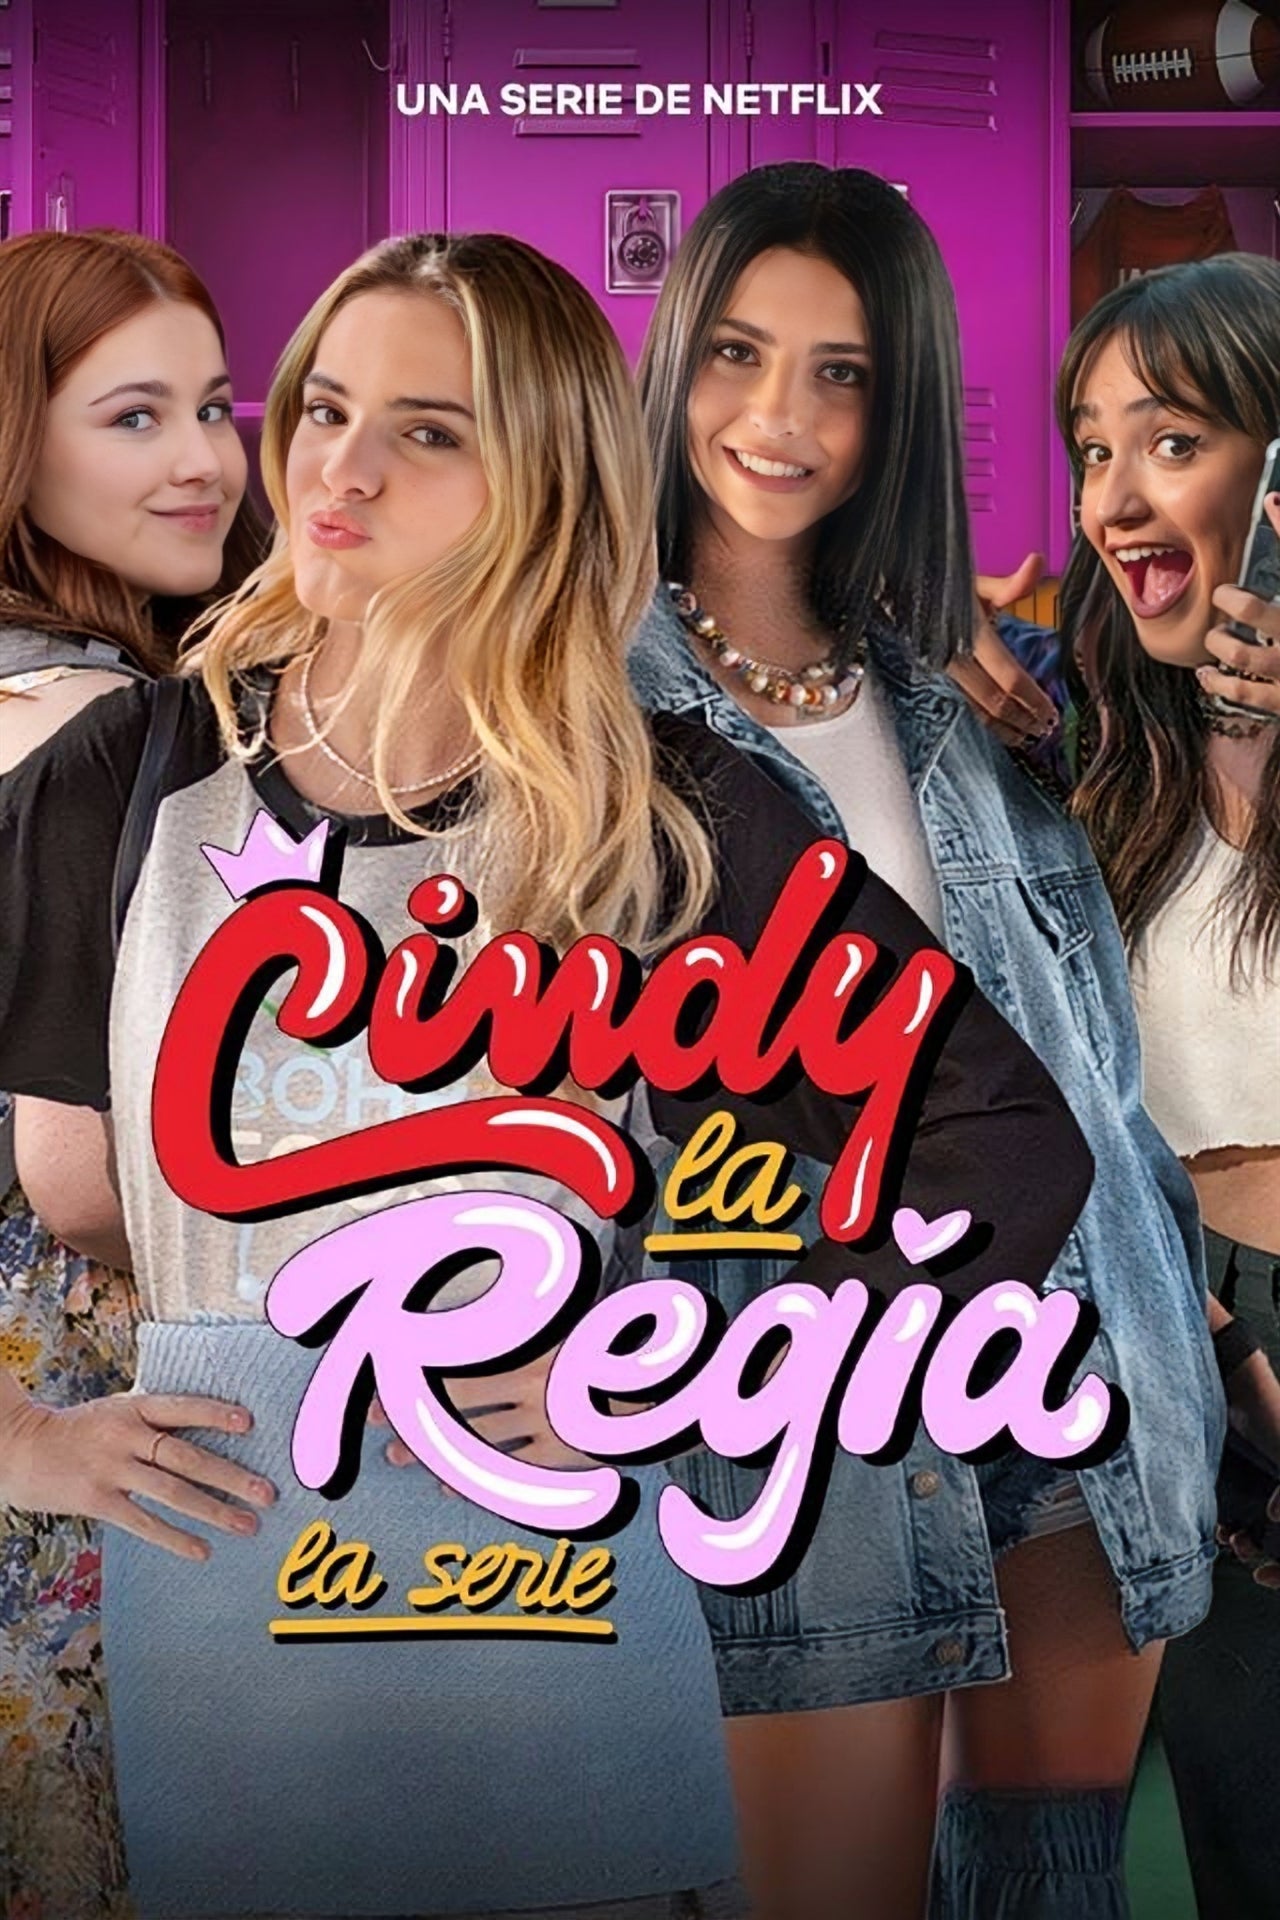 TV ratings for Cindy La Regia: The High School Years (Cindy La Regia: La Serie) in Germany. Netflix TV series